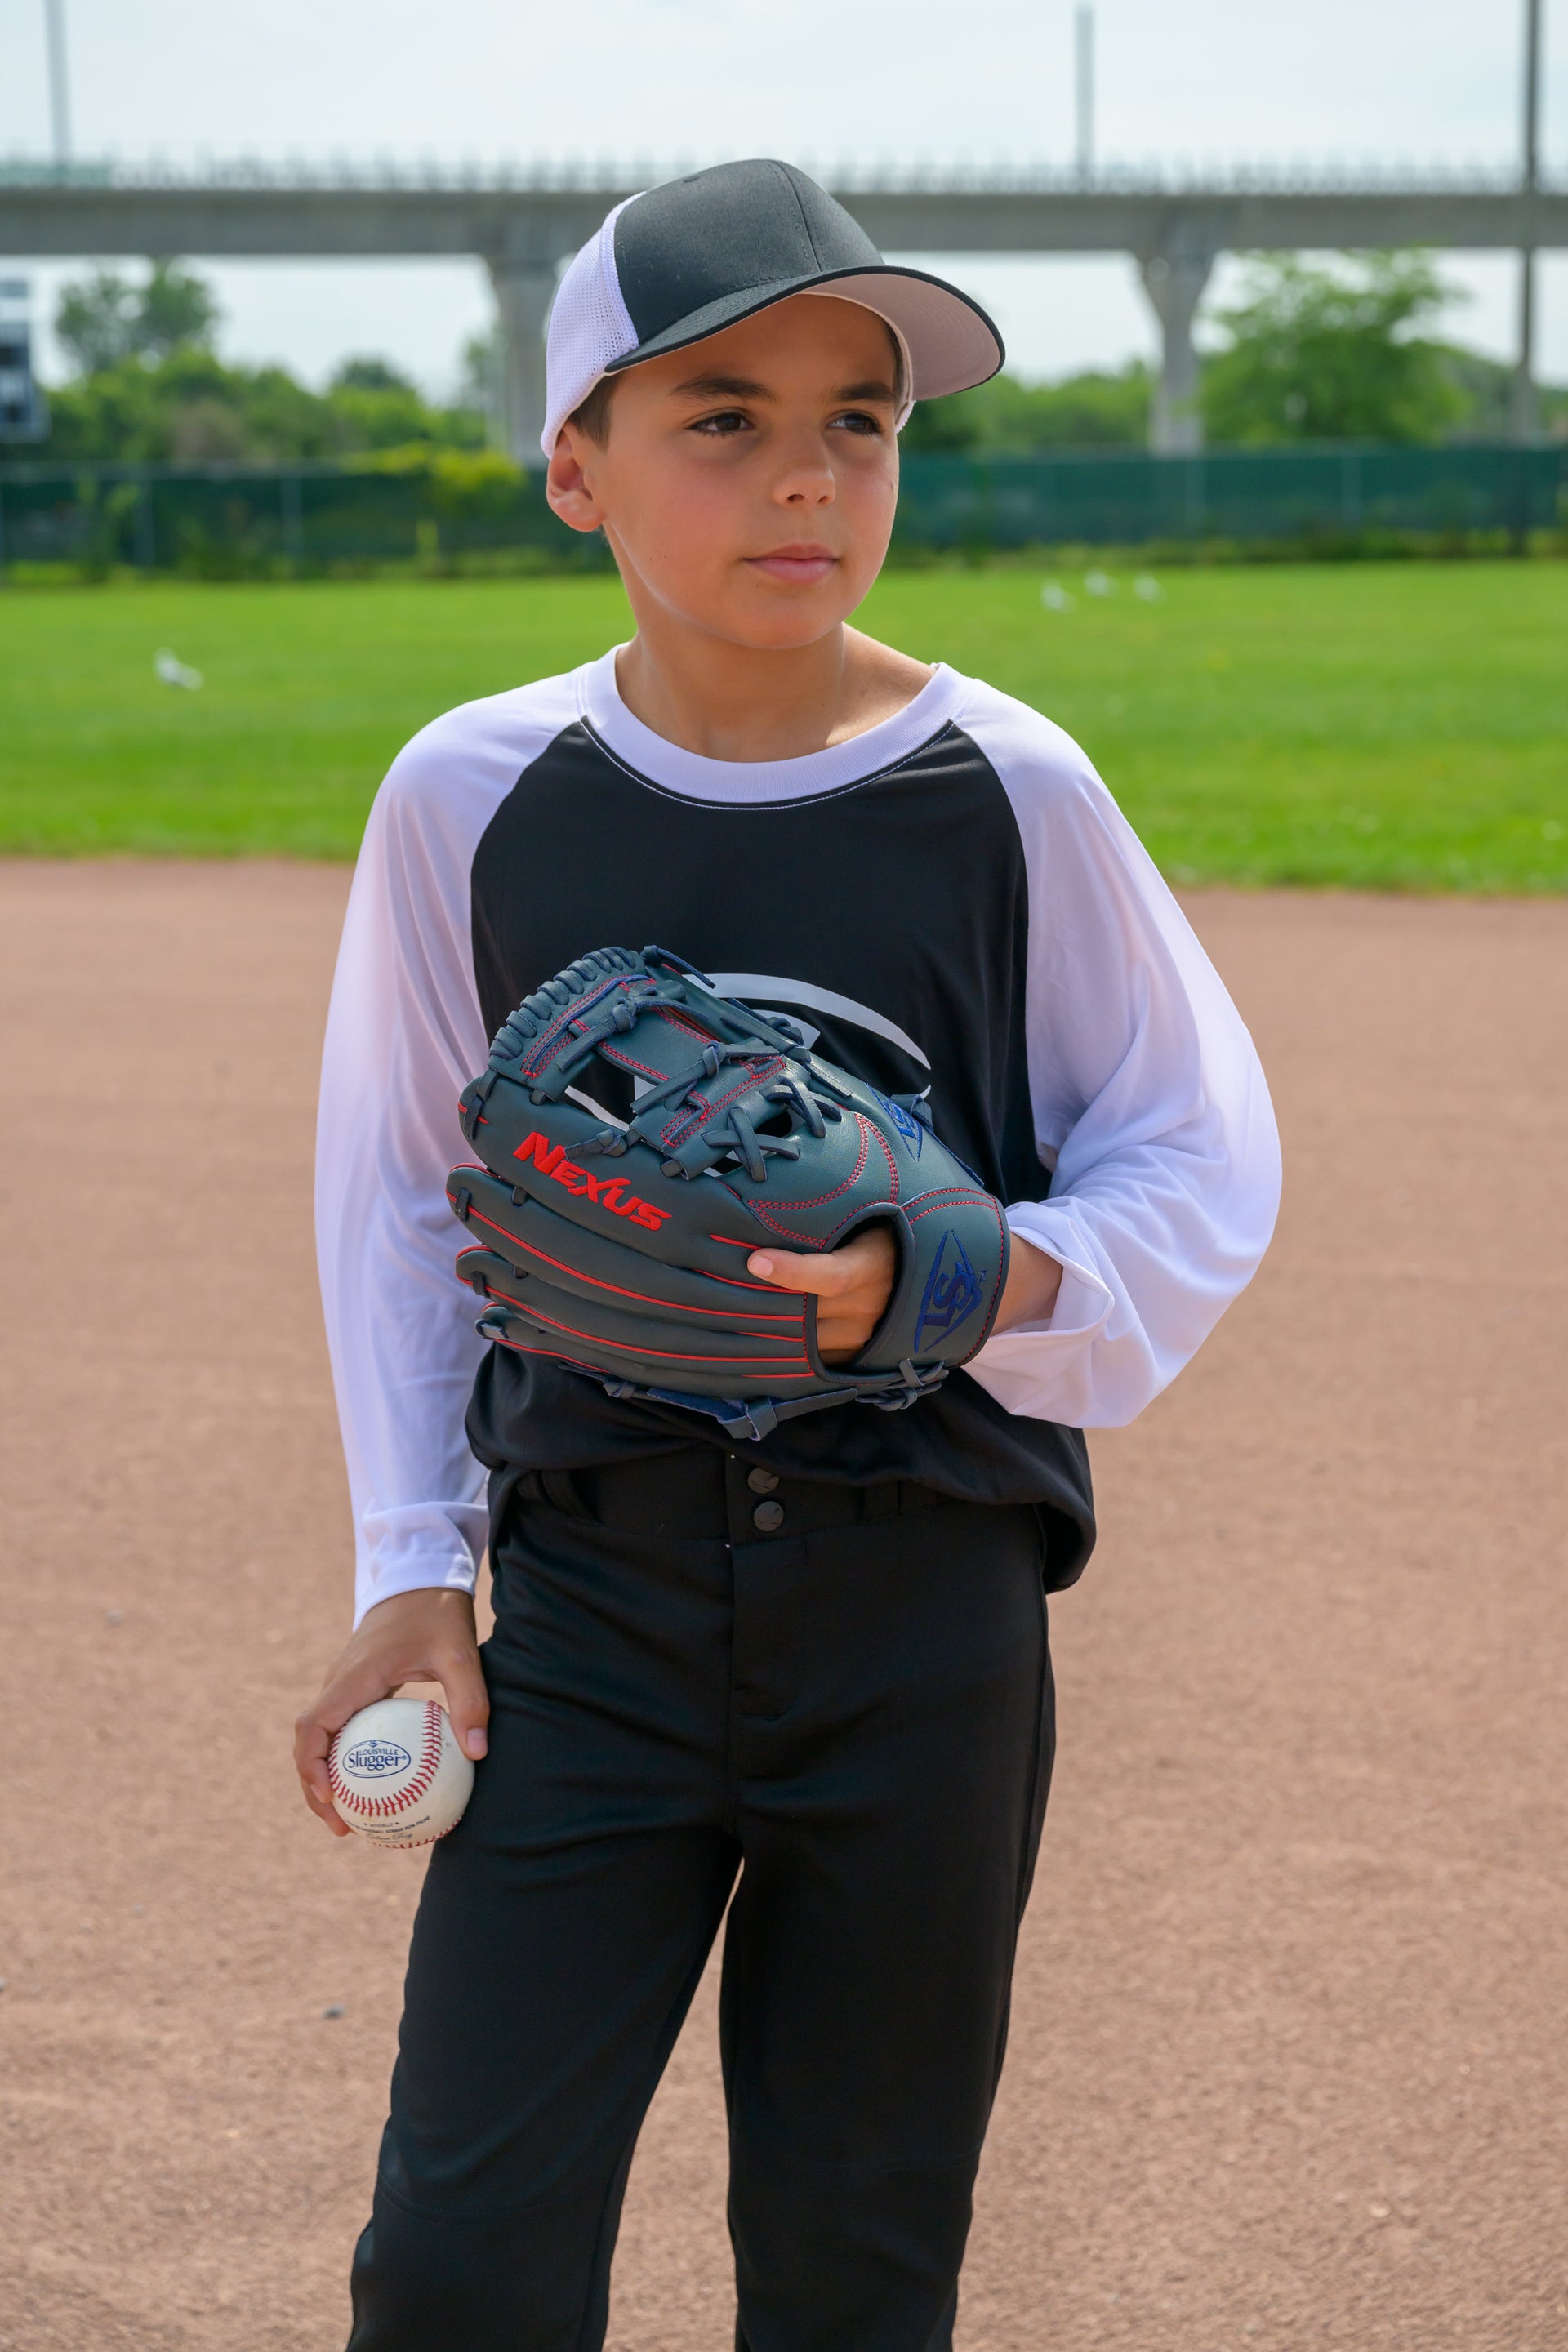 A baseball player wearing a Nexus baseball glove